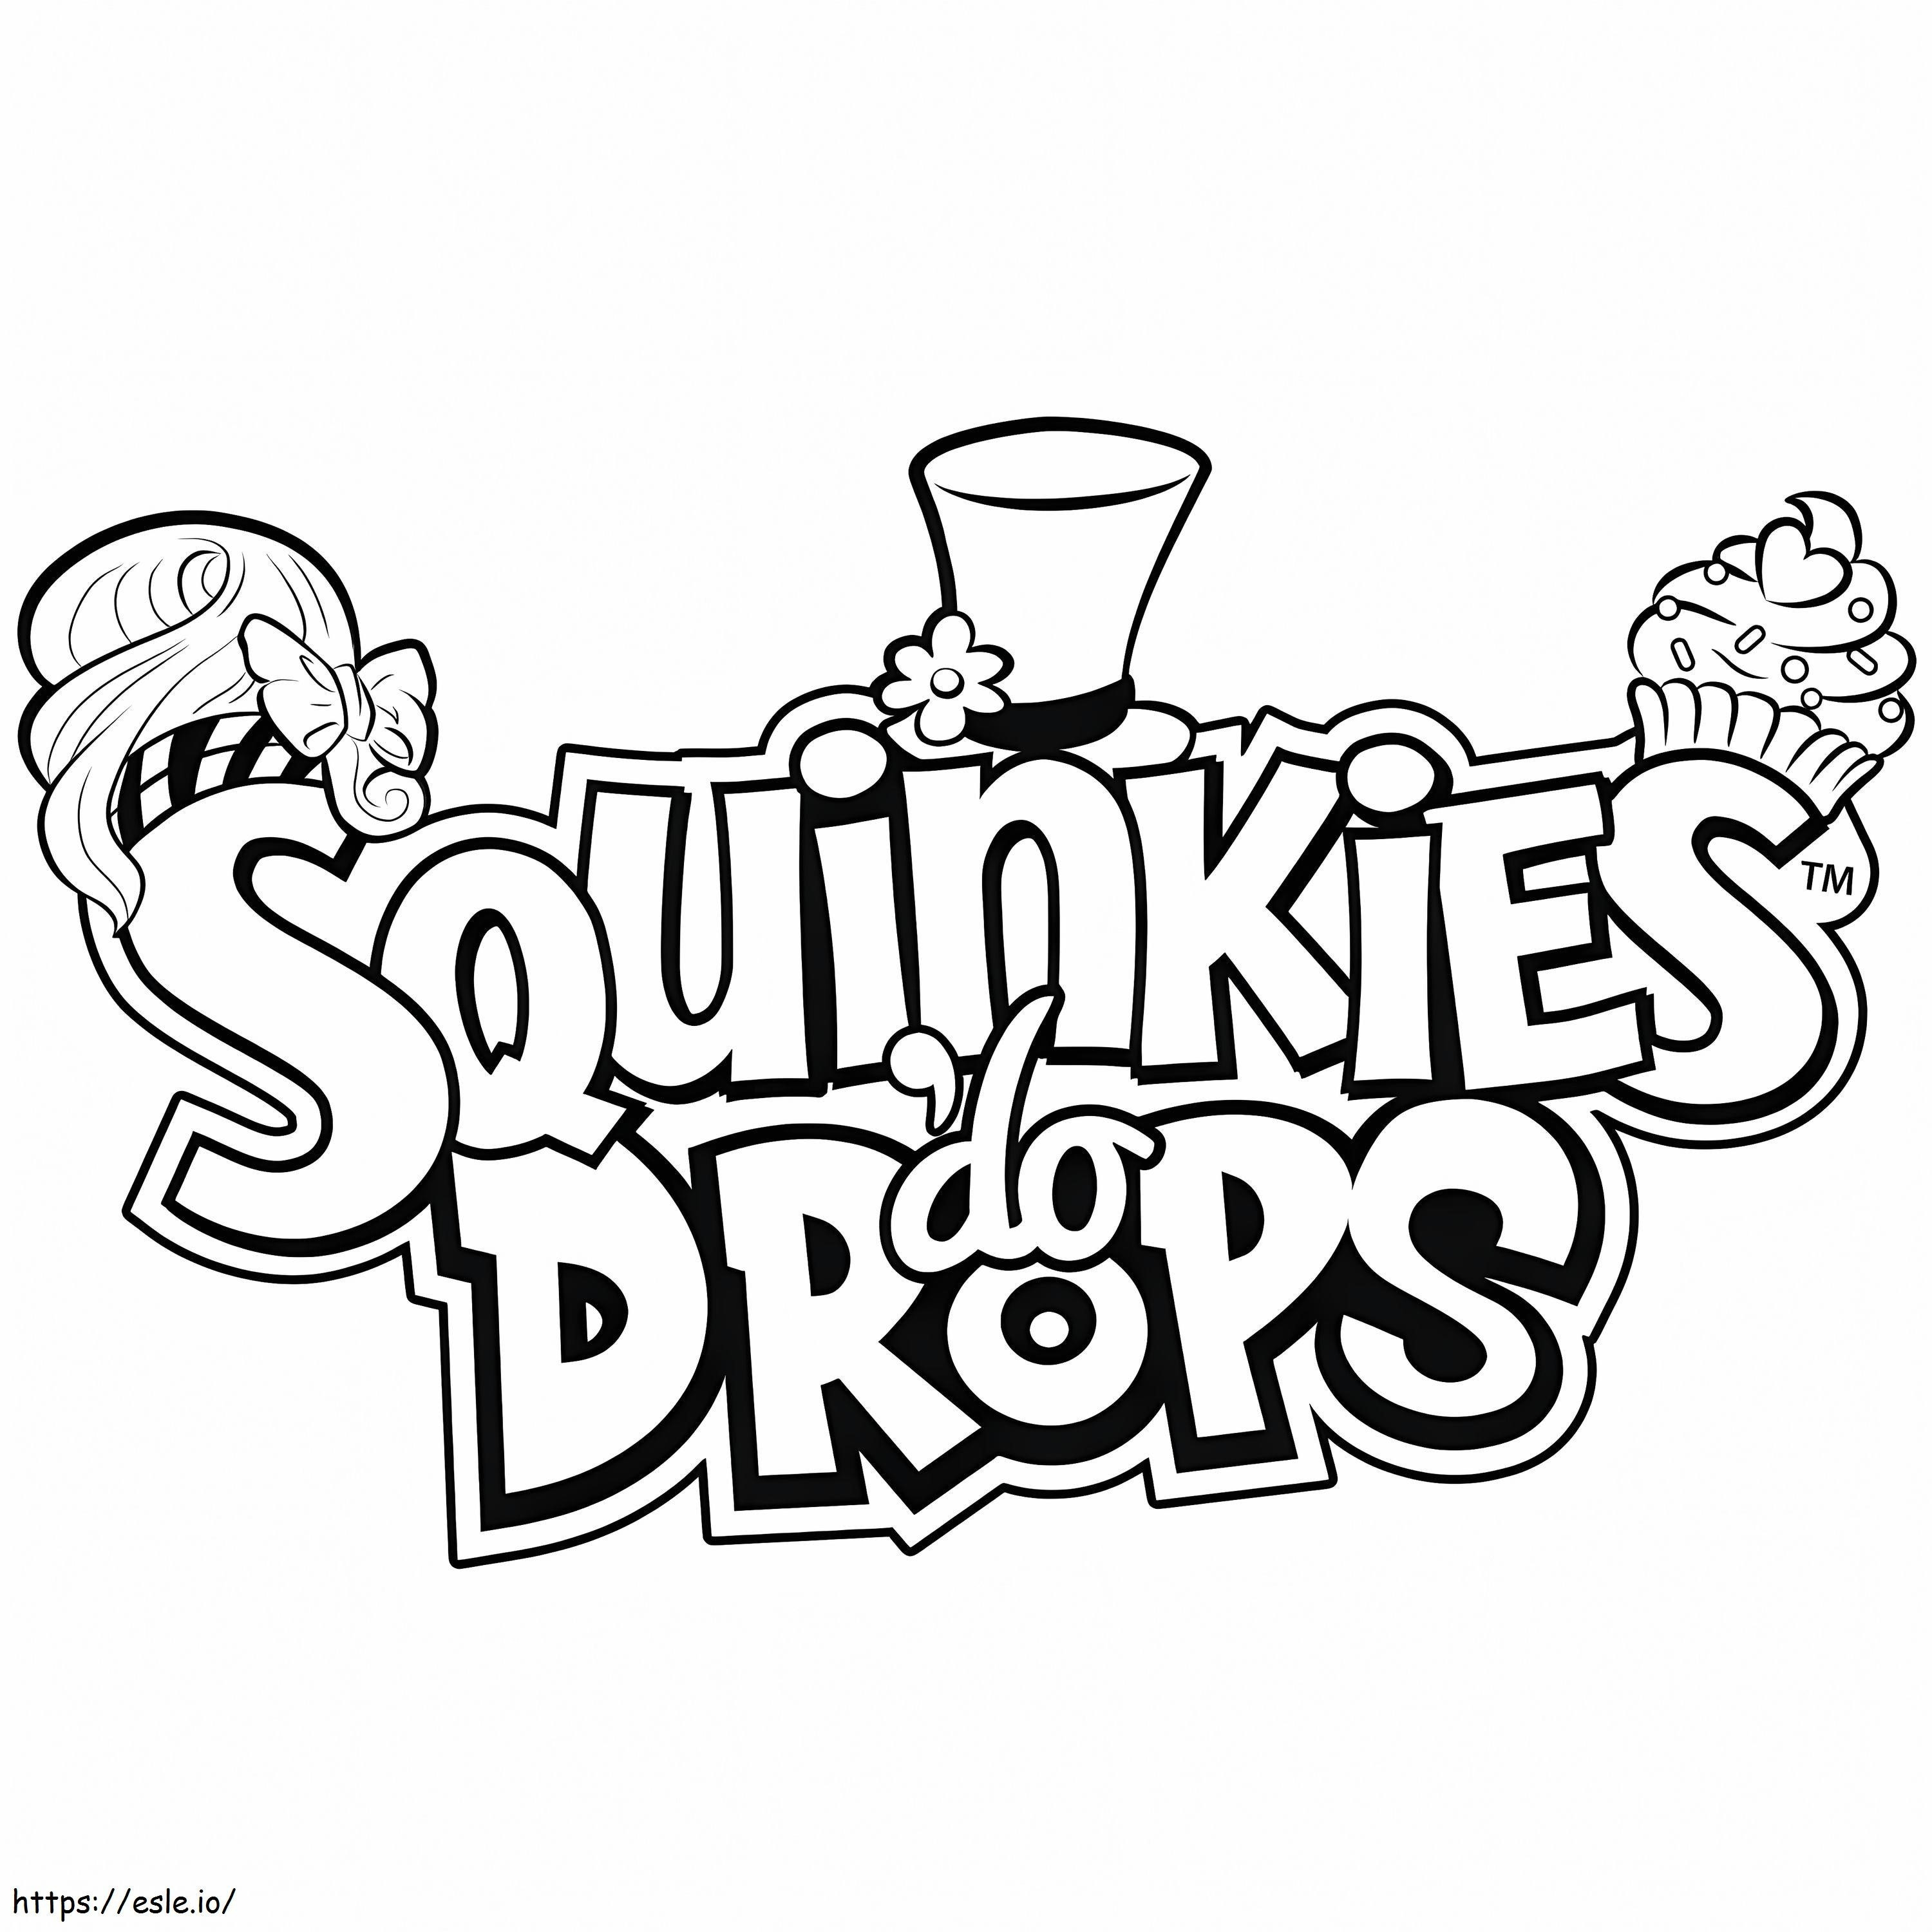 Squinkies Staffel 1 ausmalbilder